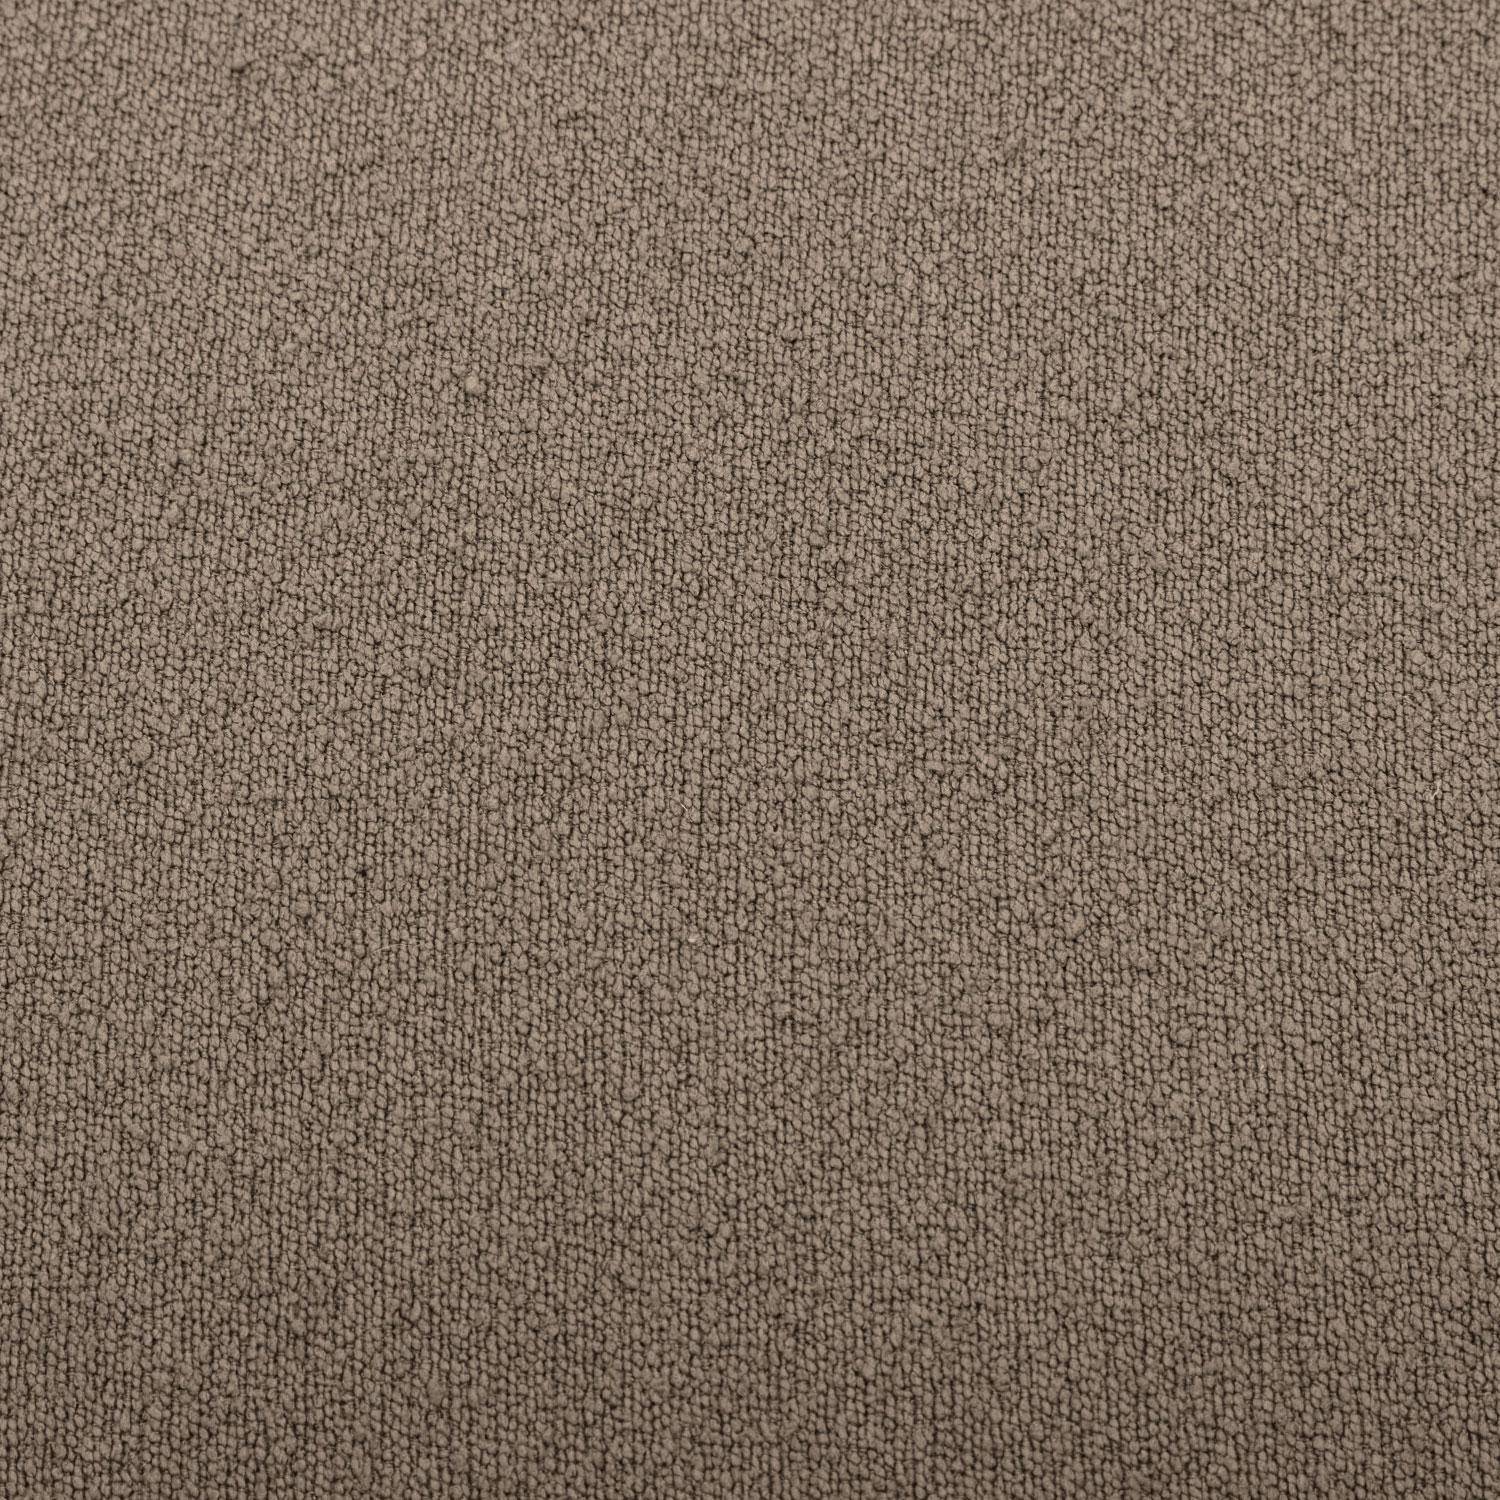 Hocker in Kieselsteinform mit taupefarbenem Stoffbezug, B 60 x T 44 x H 40 cm - Tao Photo7